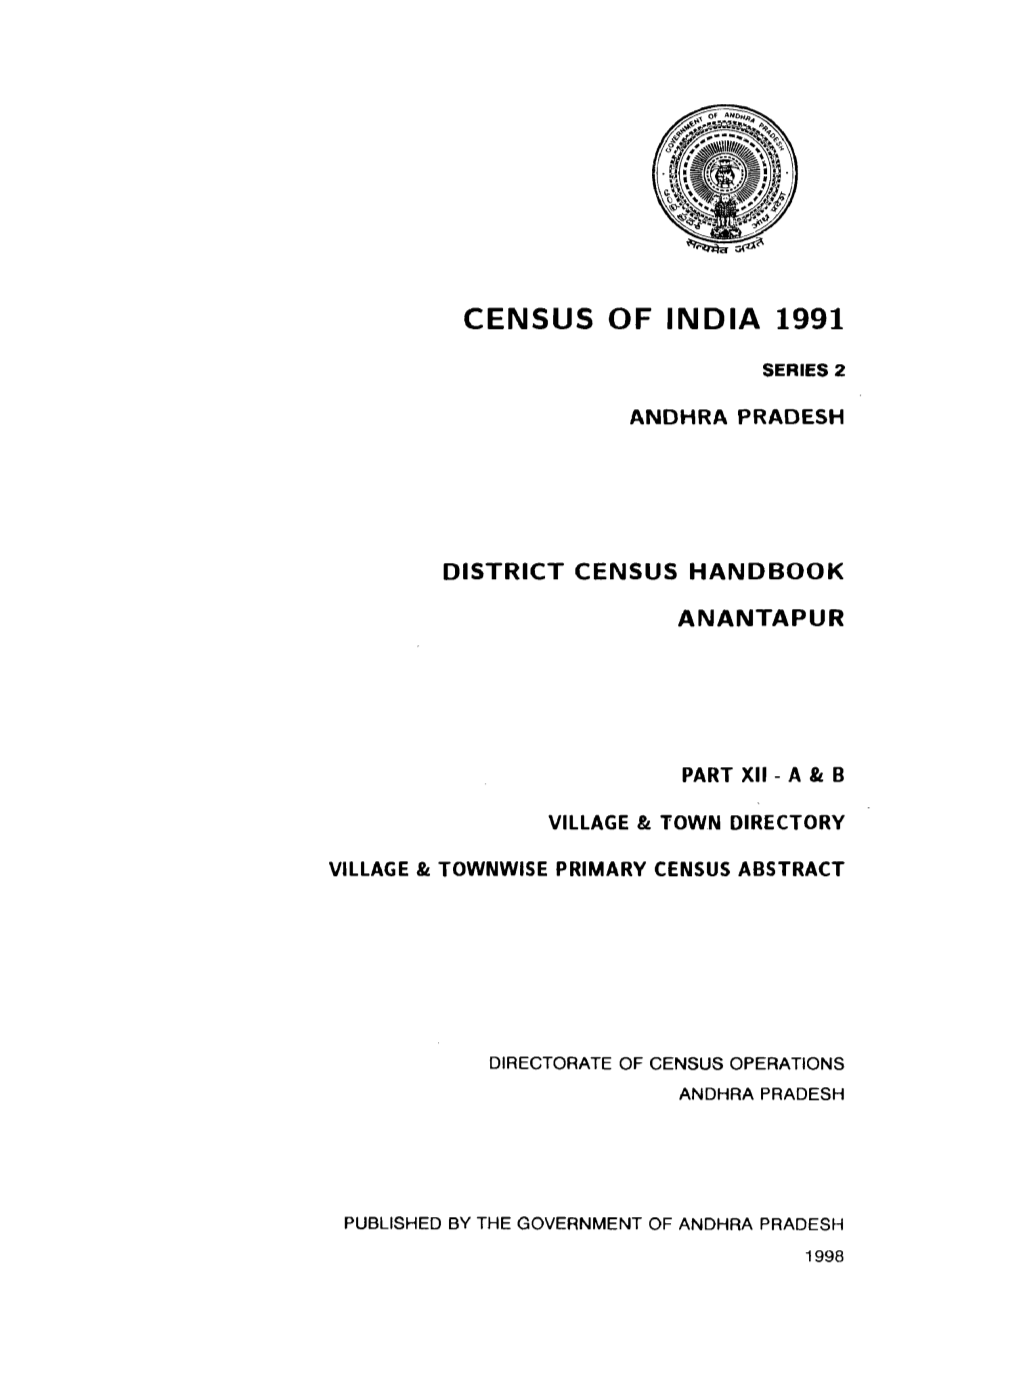 District Census Handbook, Anantapur, Part XII-A & B, Series-2